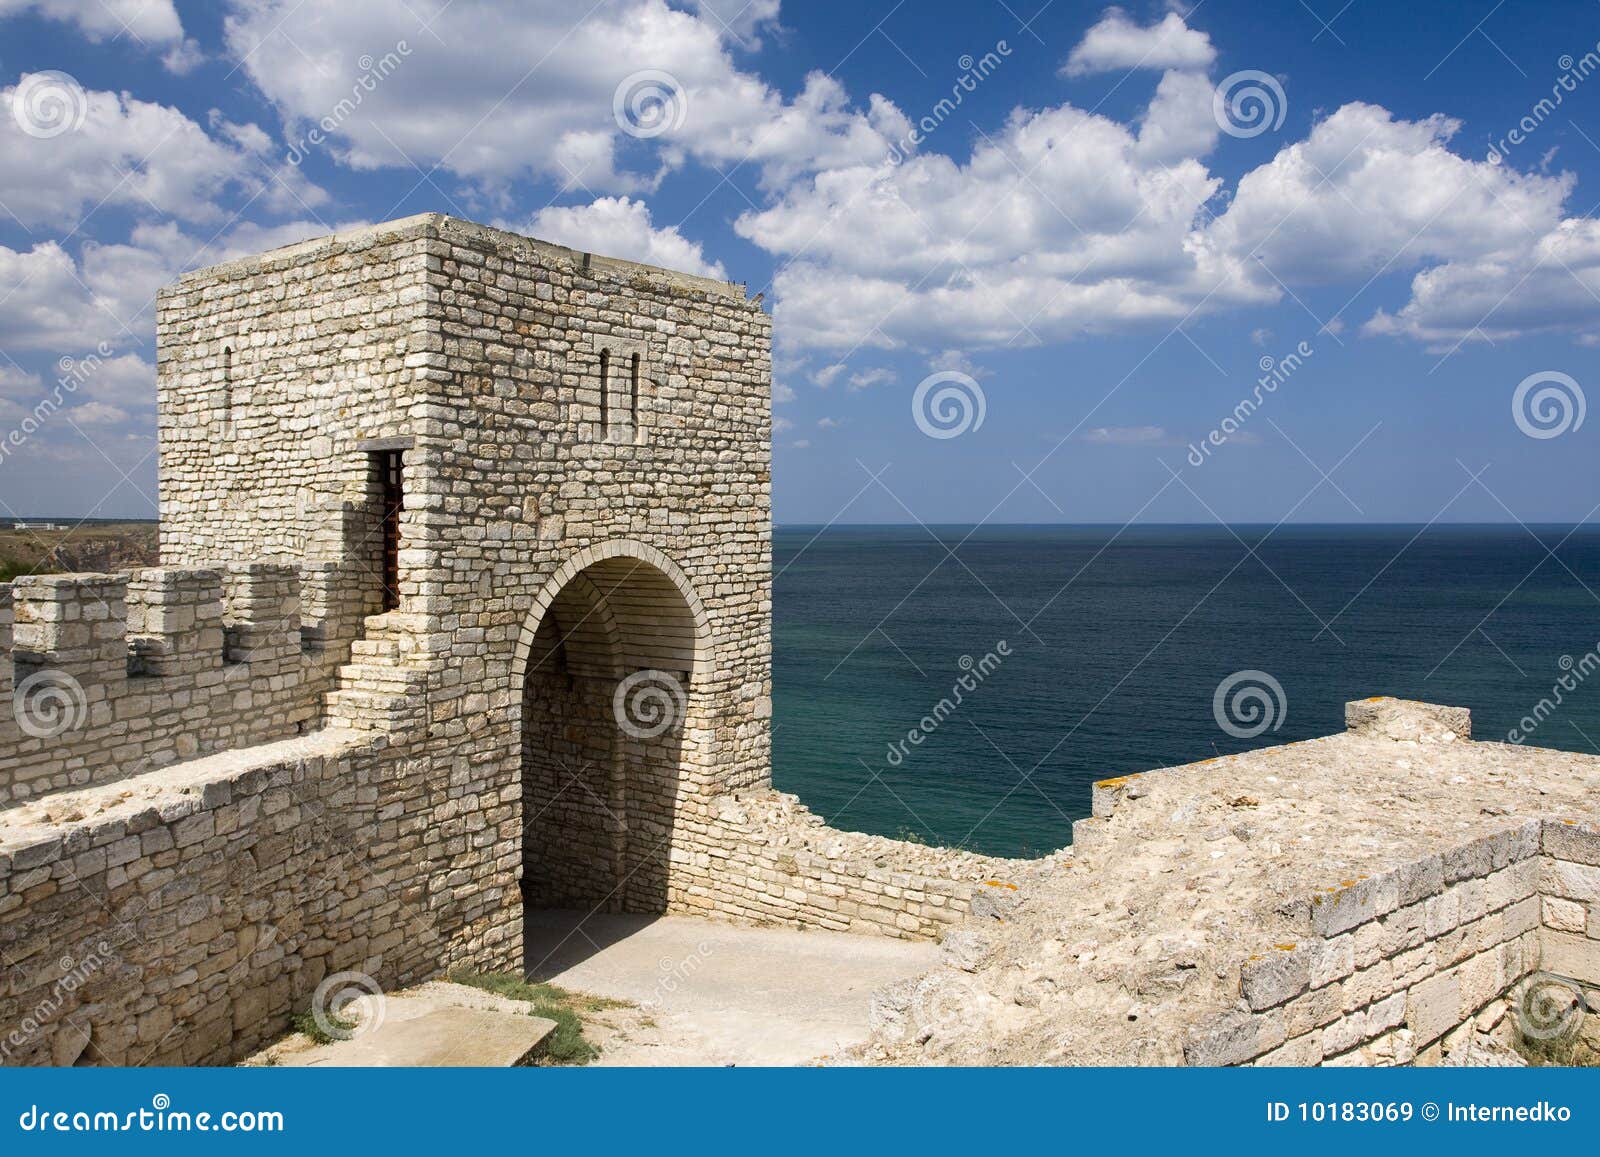 the medieval fortress on cape kaliakra, bulgaria